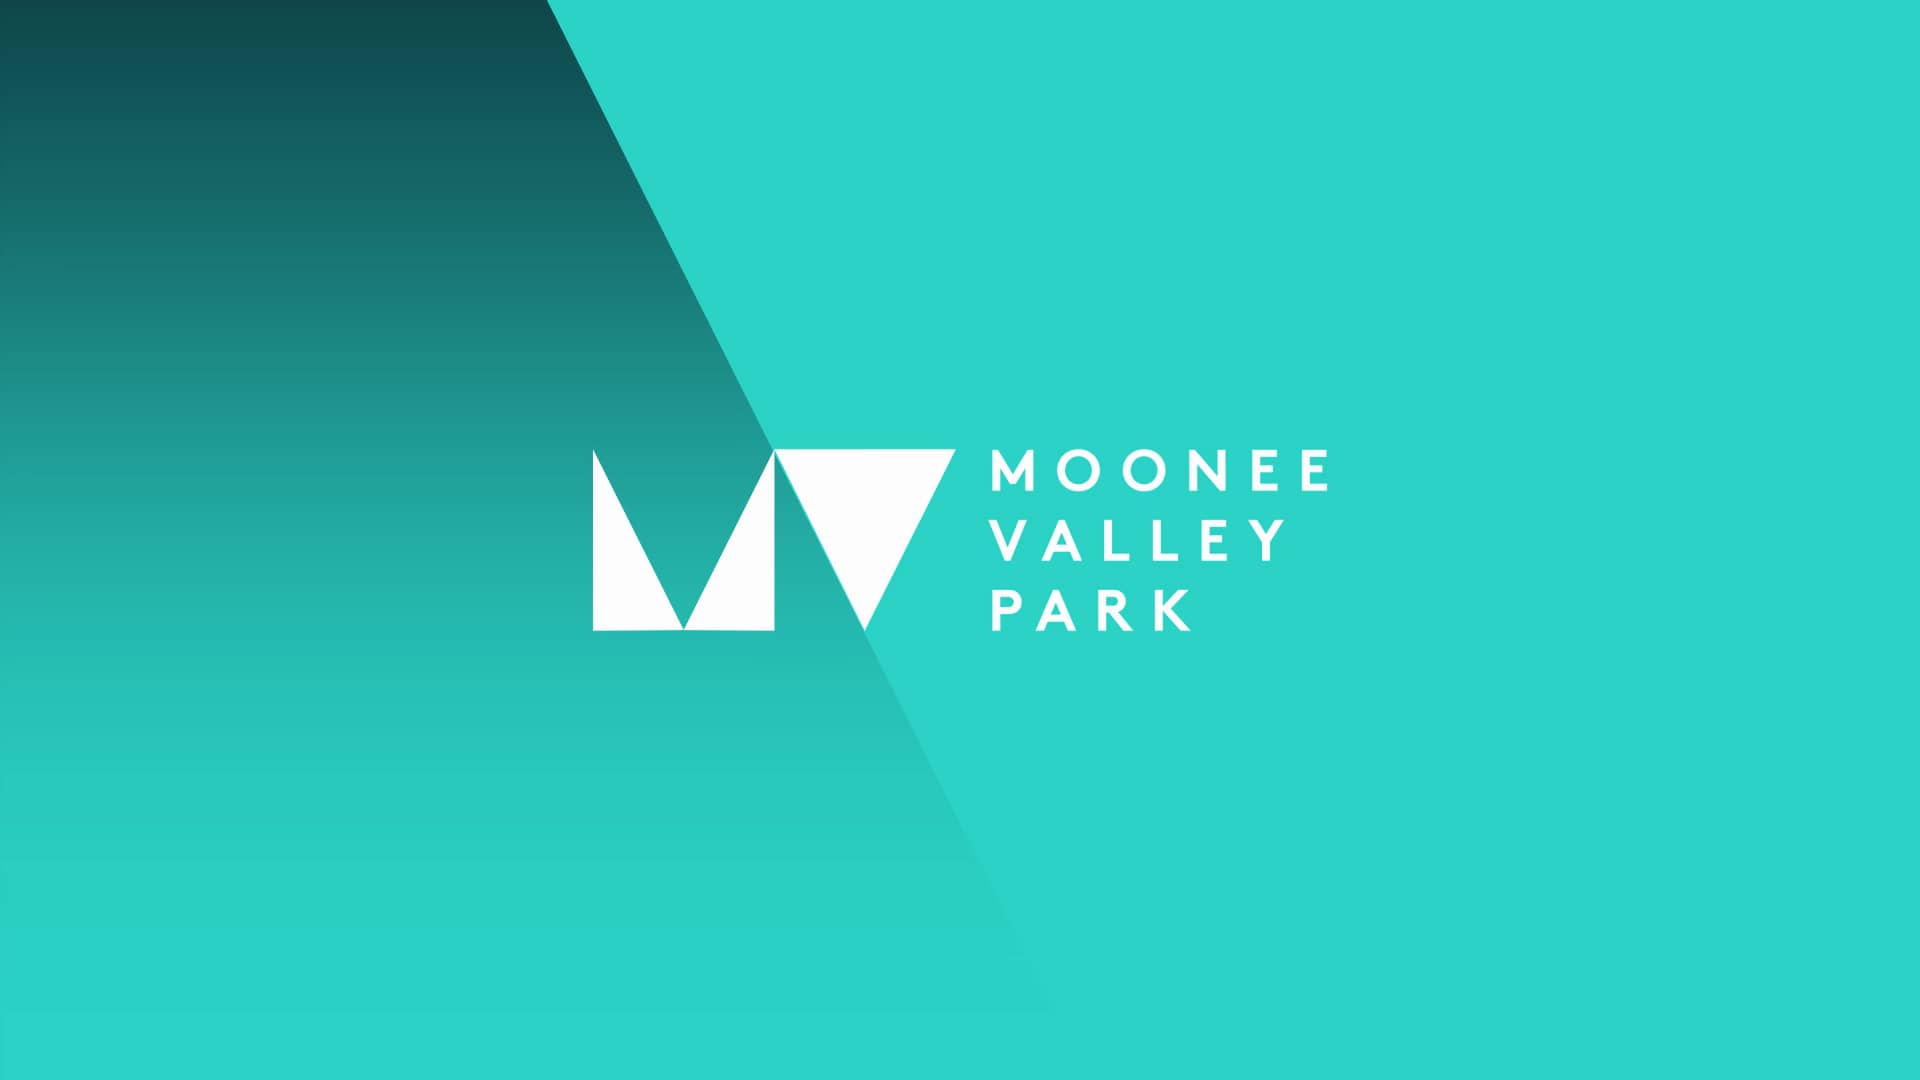 Moonee Valley Park on Vimeo